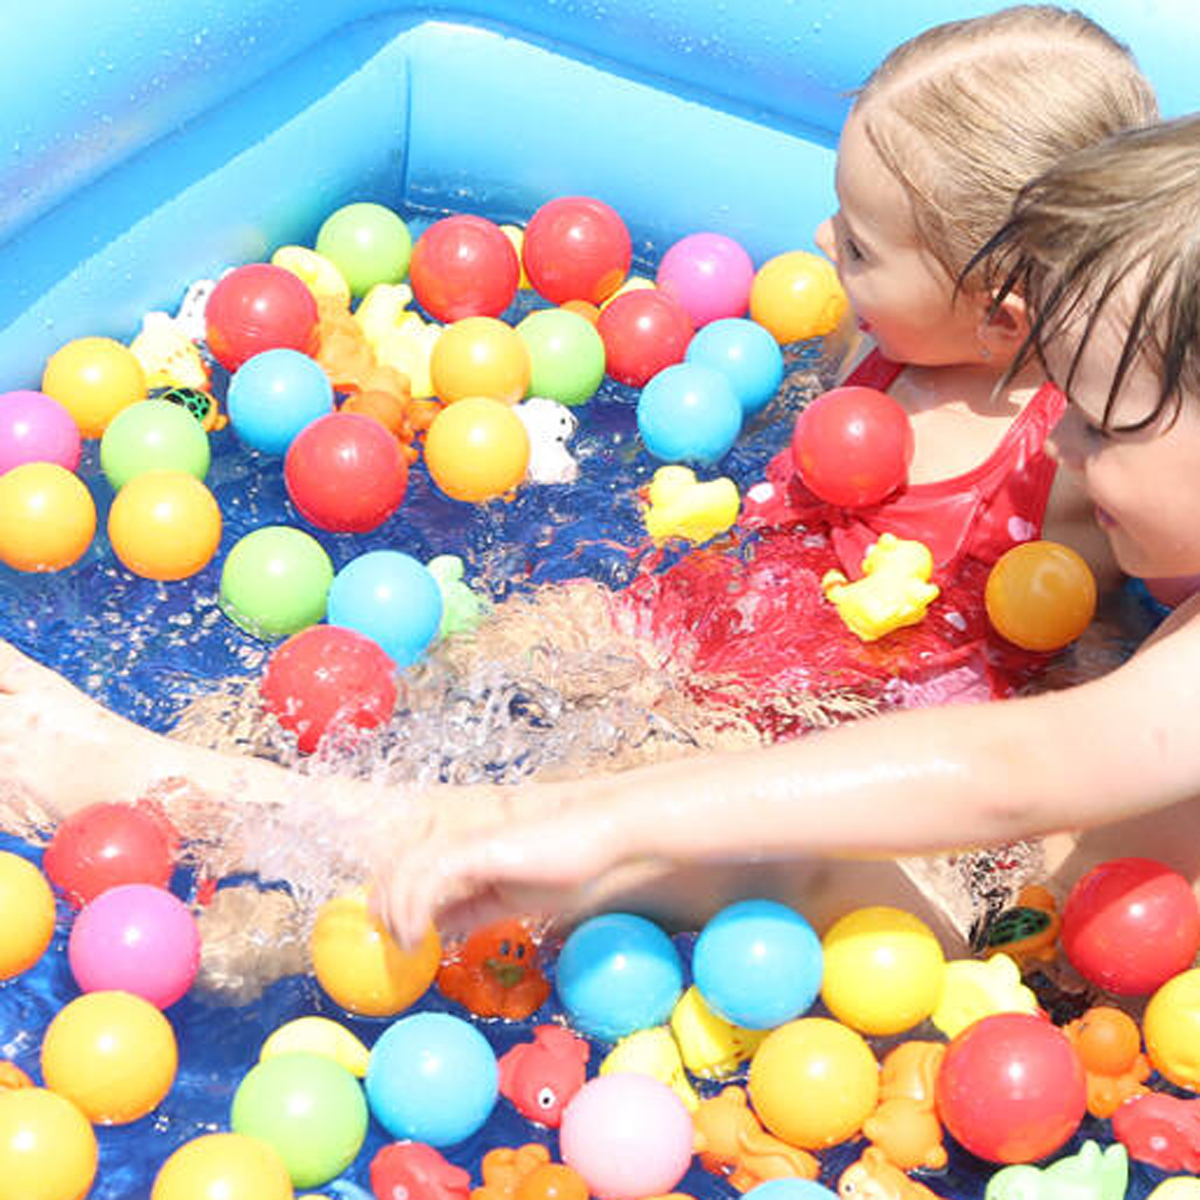 120130150180210cm-Kids-Inflatable-Swimming-Pool-Indoor-Home-For-Children-Swim-1674805-9